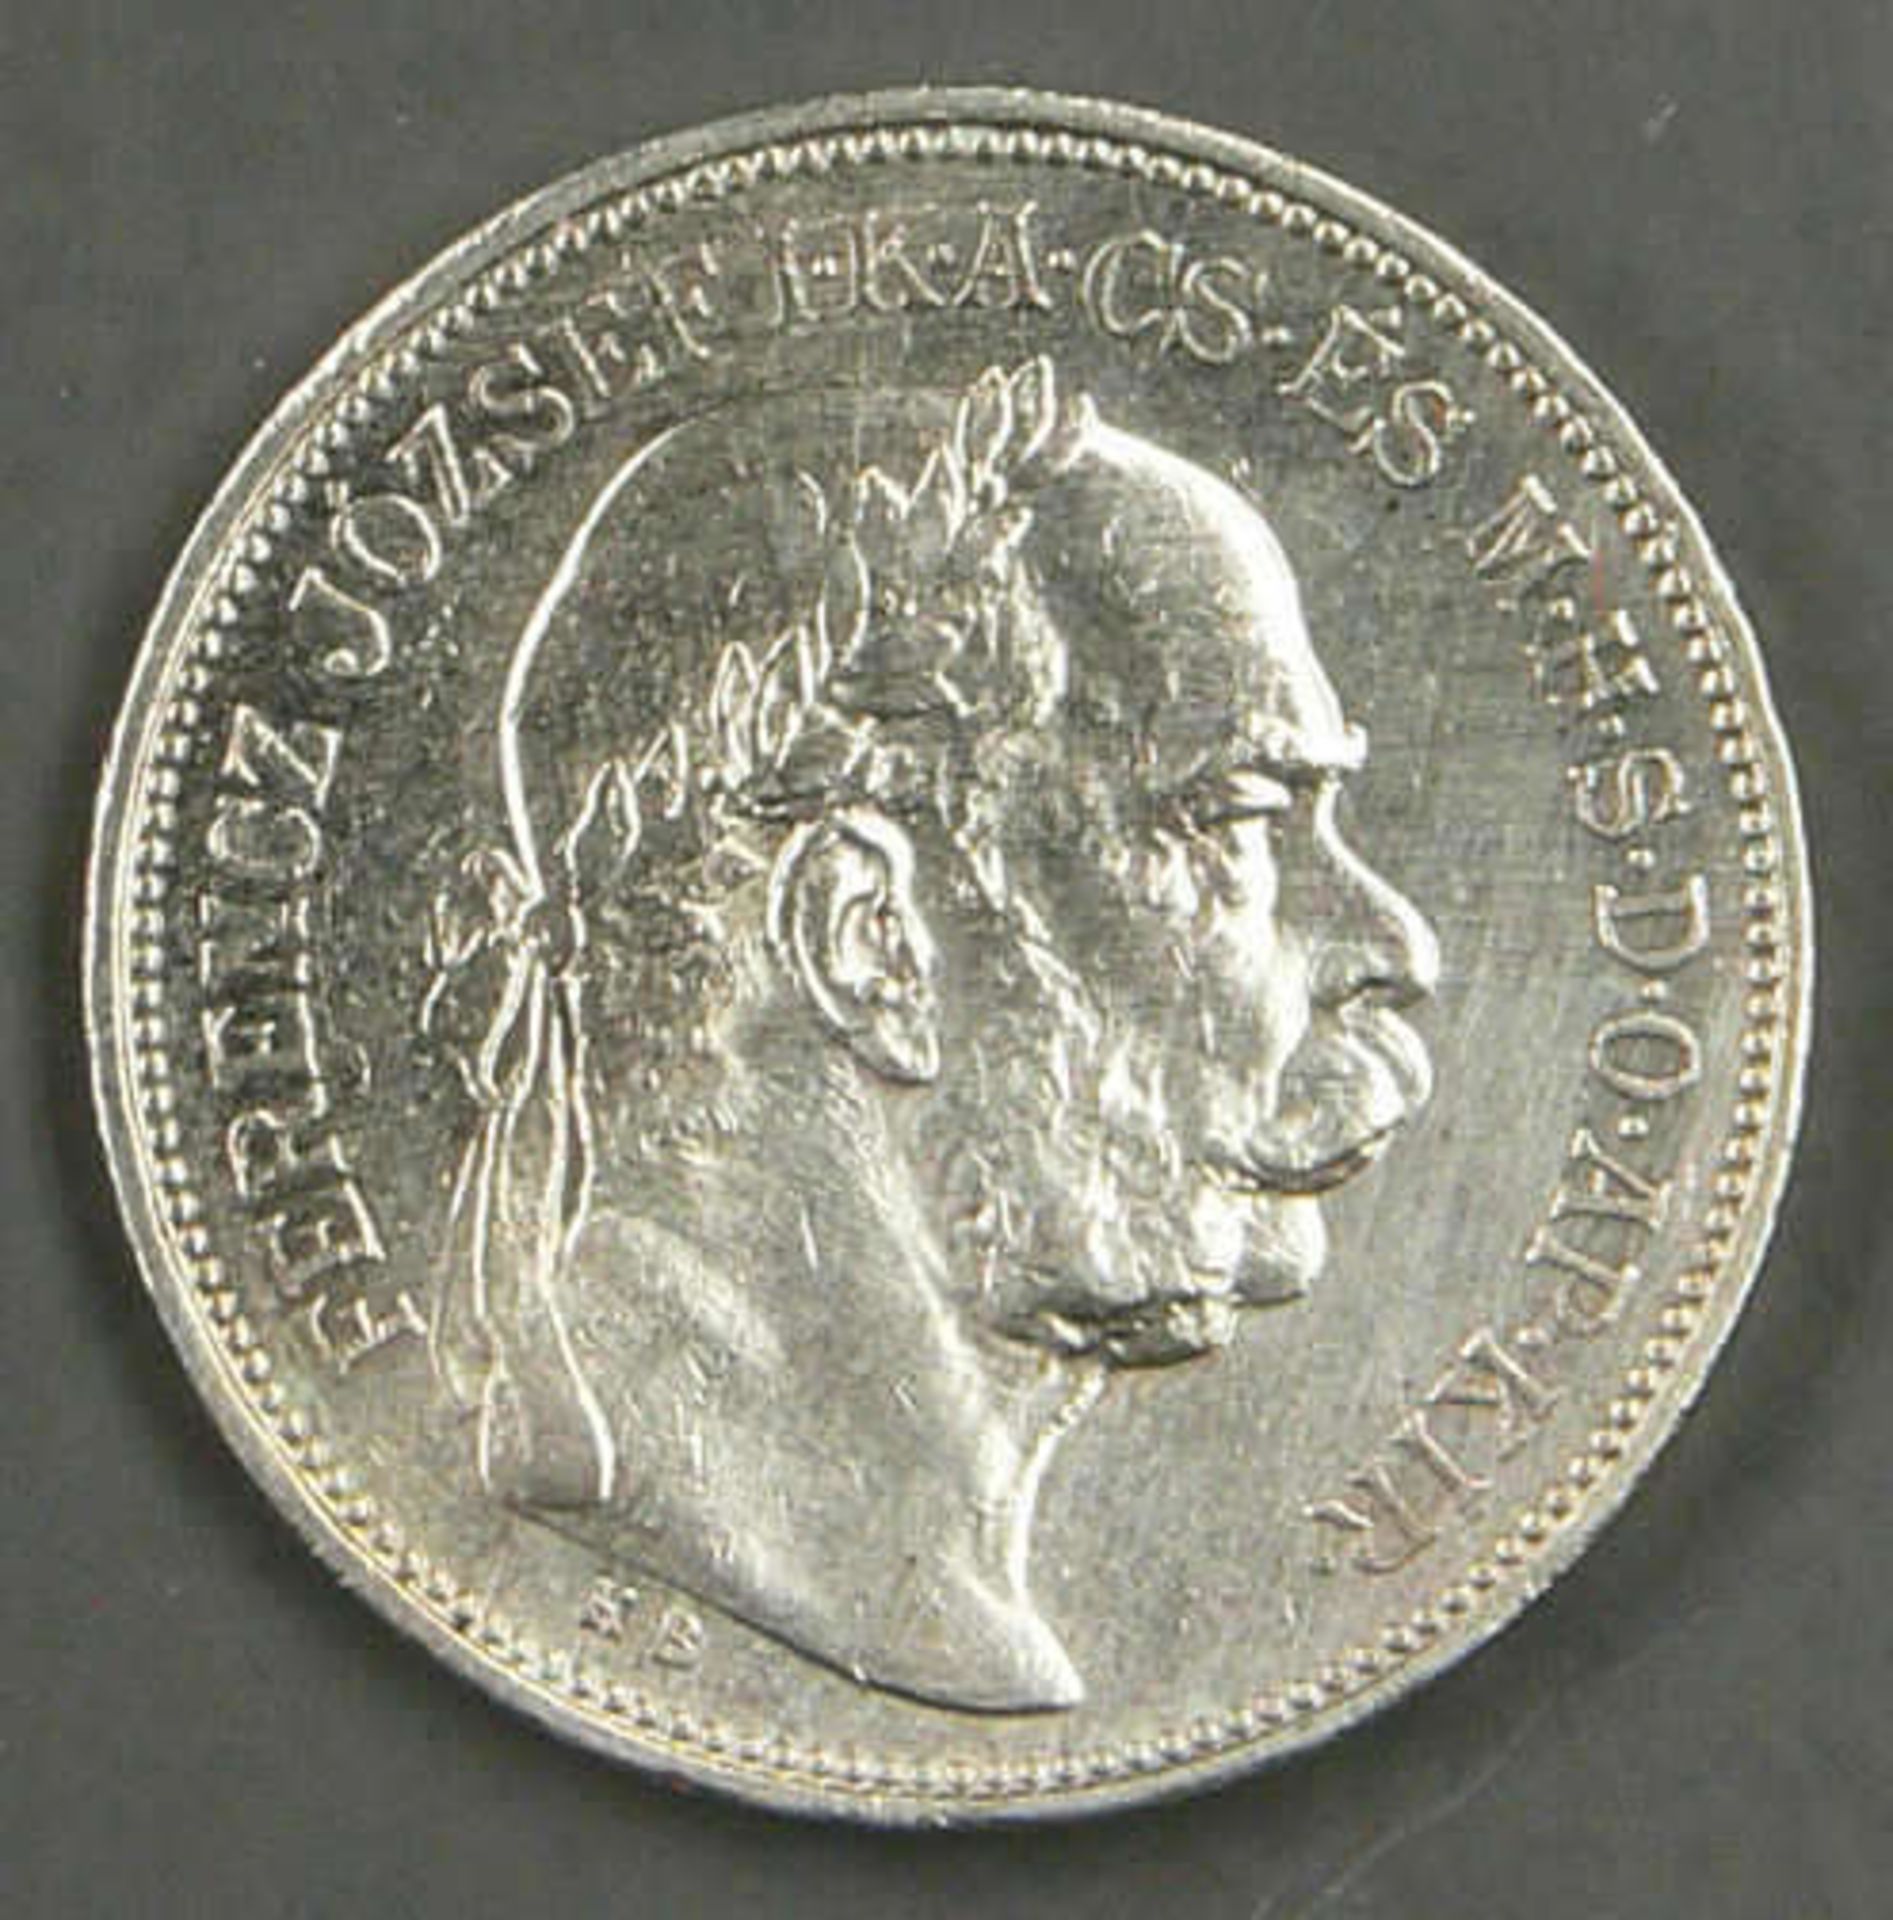 Österreich 1913, 2 Korona, unzirkuliert. Austria 1913, 2 corona, uncirculated. - Bild 2 aus 2